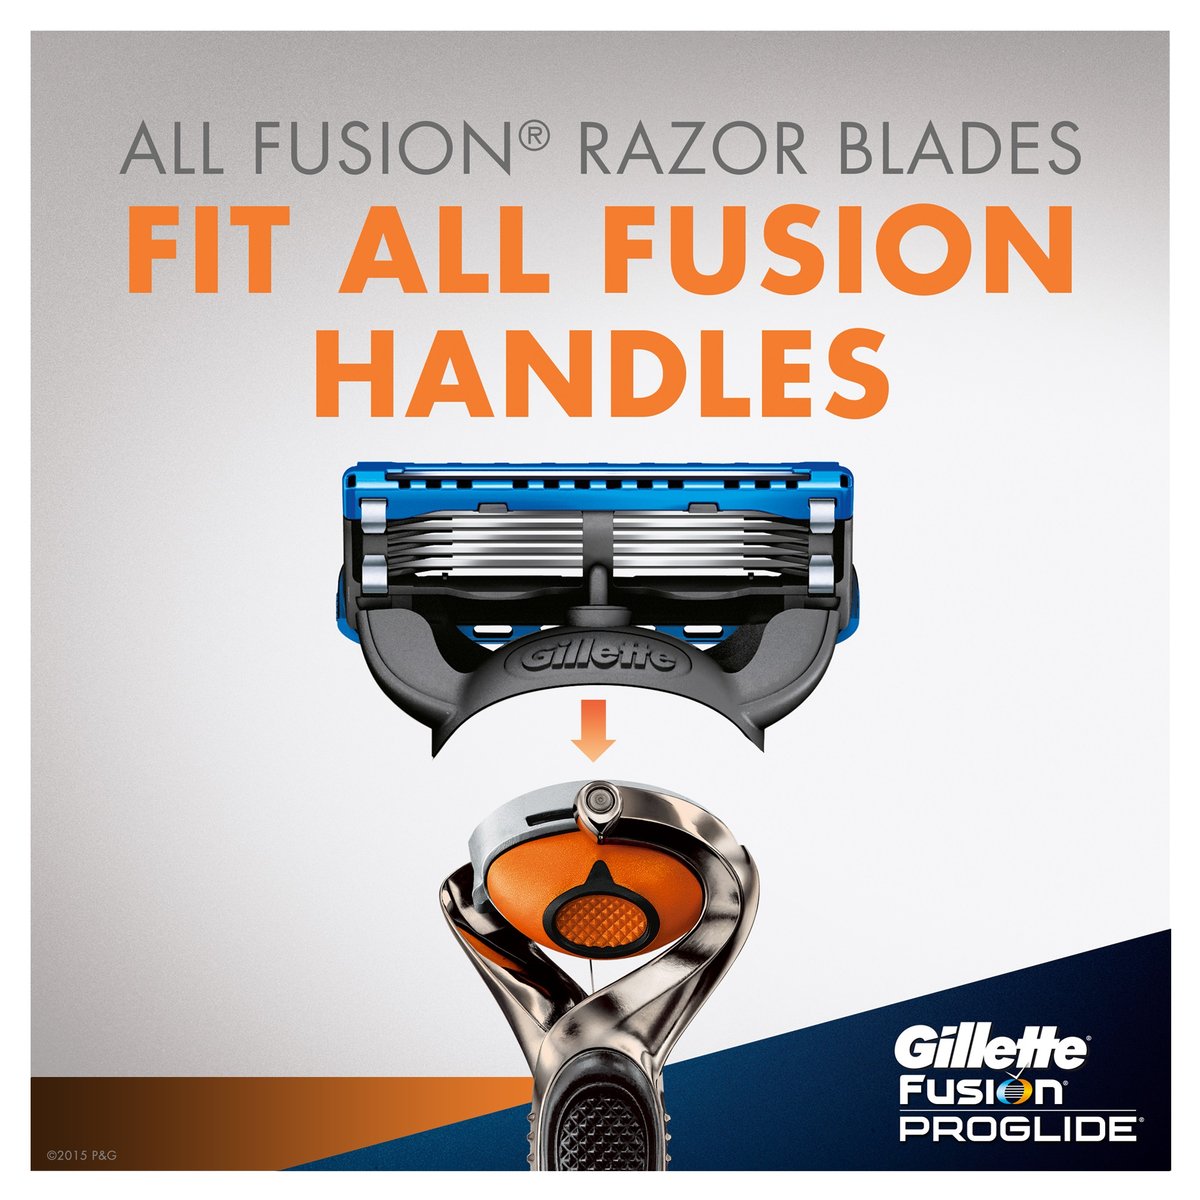 Gillette Fusion ProGlide 5 Men's Razor Blades Refills 2 pcs